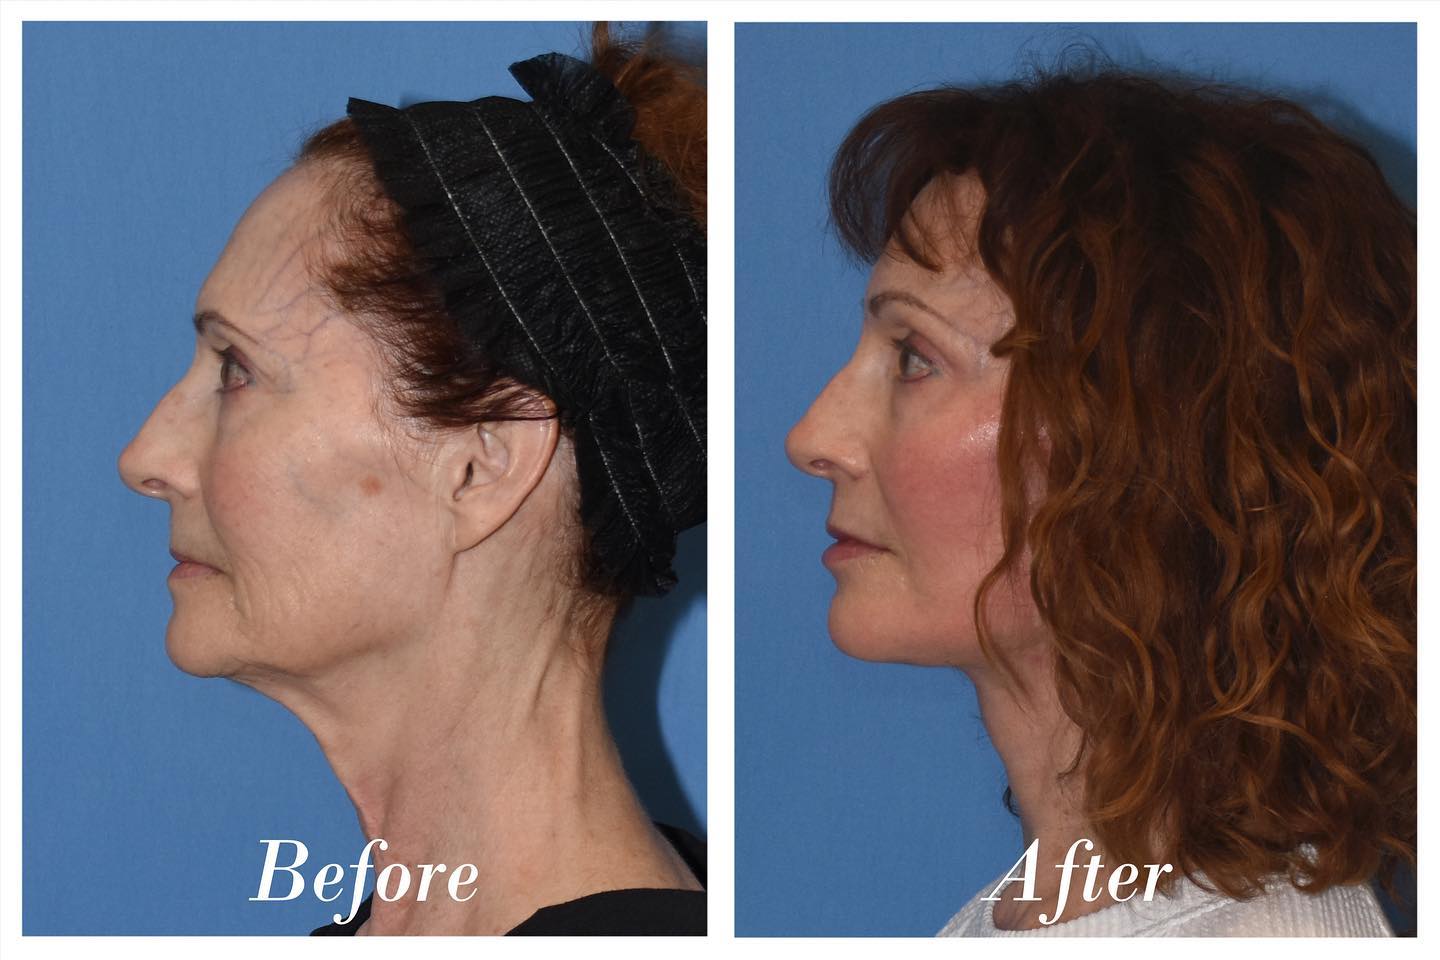 Facelift Browlift C02 Laser Skin Resurfacing Before & After Image